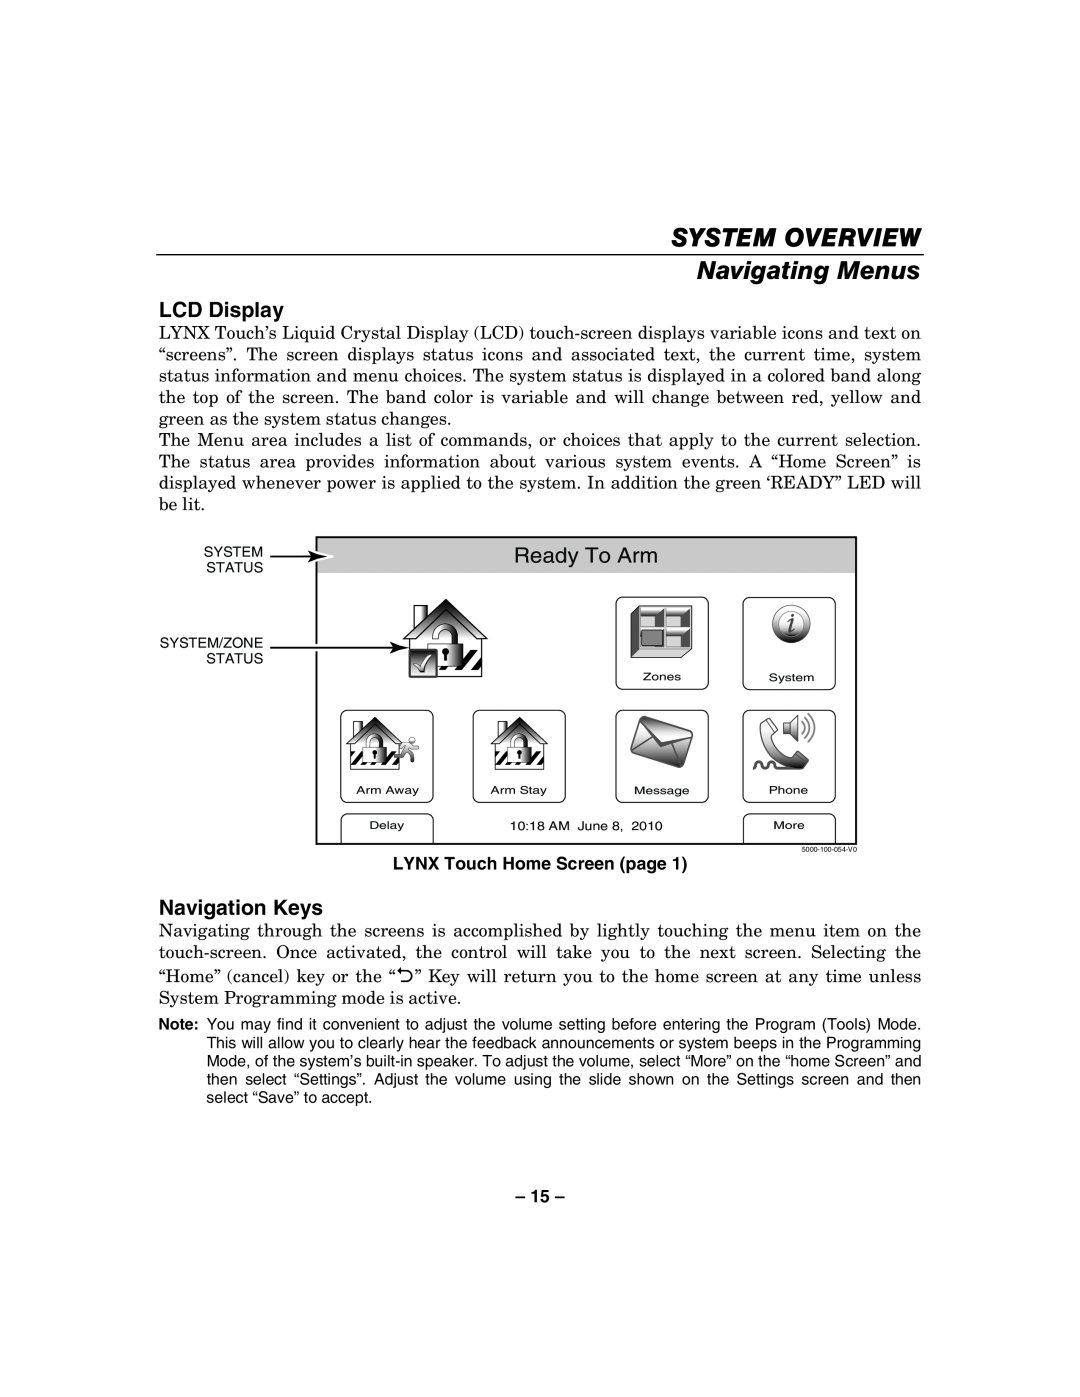 Honeywell 800-06894 manual SYSTEM OVERVIEW Navigating Menus, LCD Display, Ready To Arm, Navigation Keys 